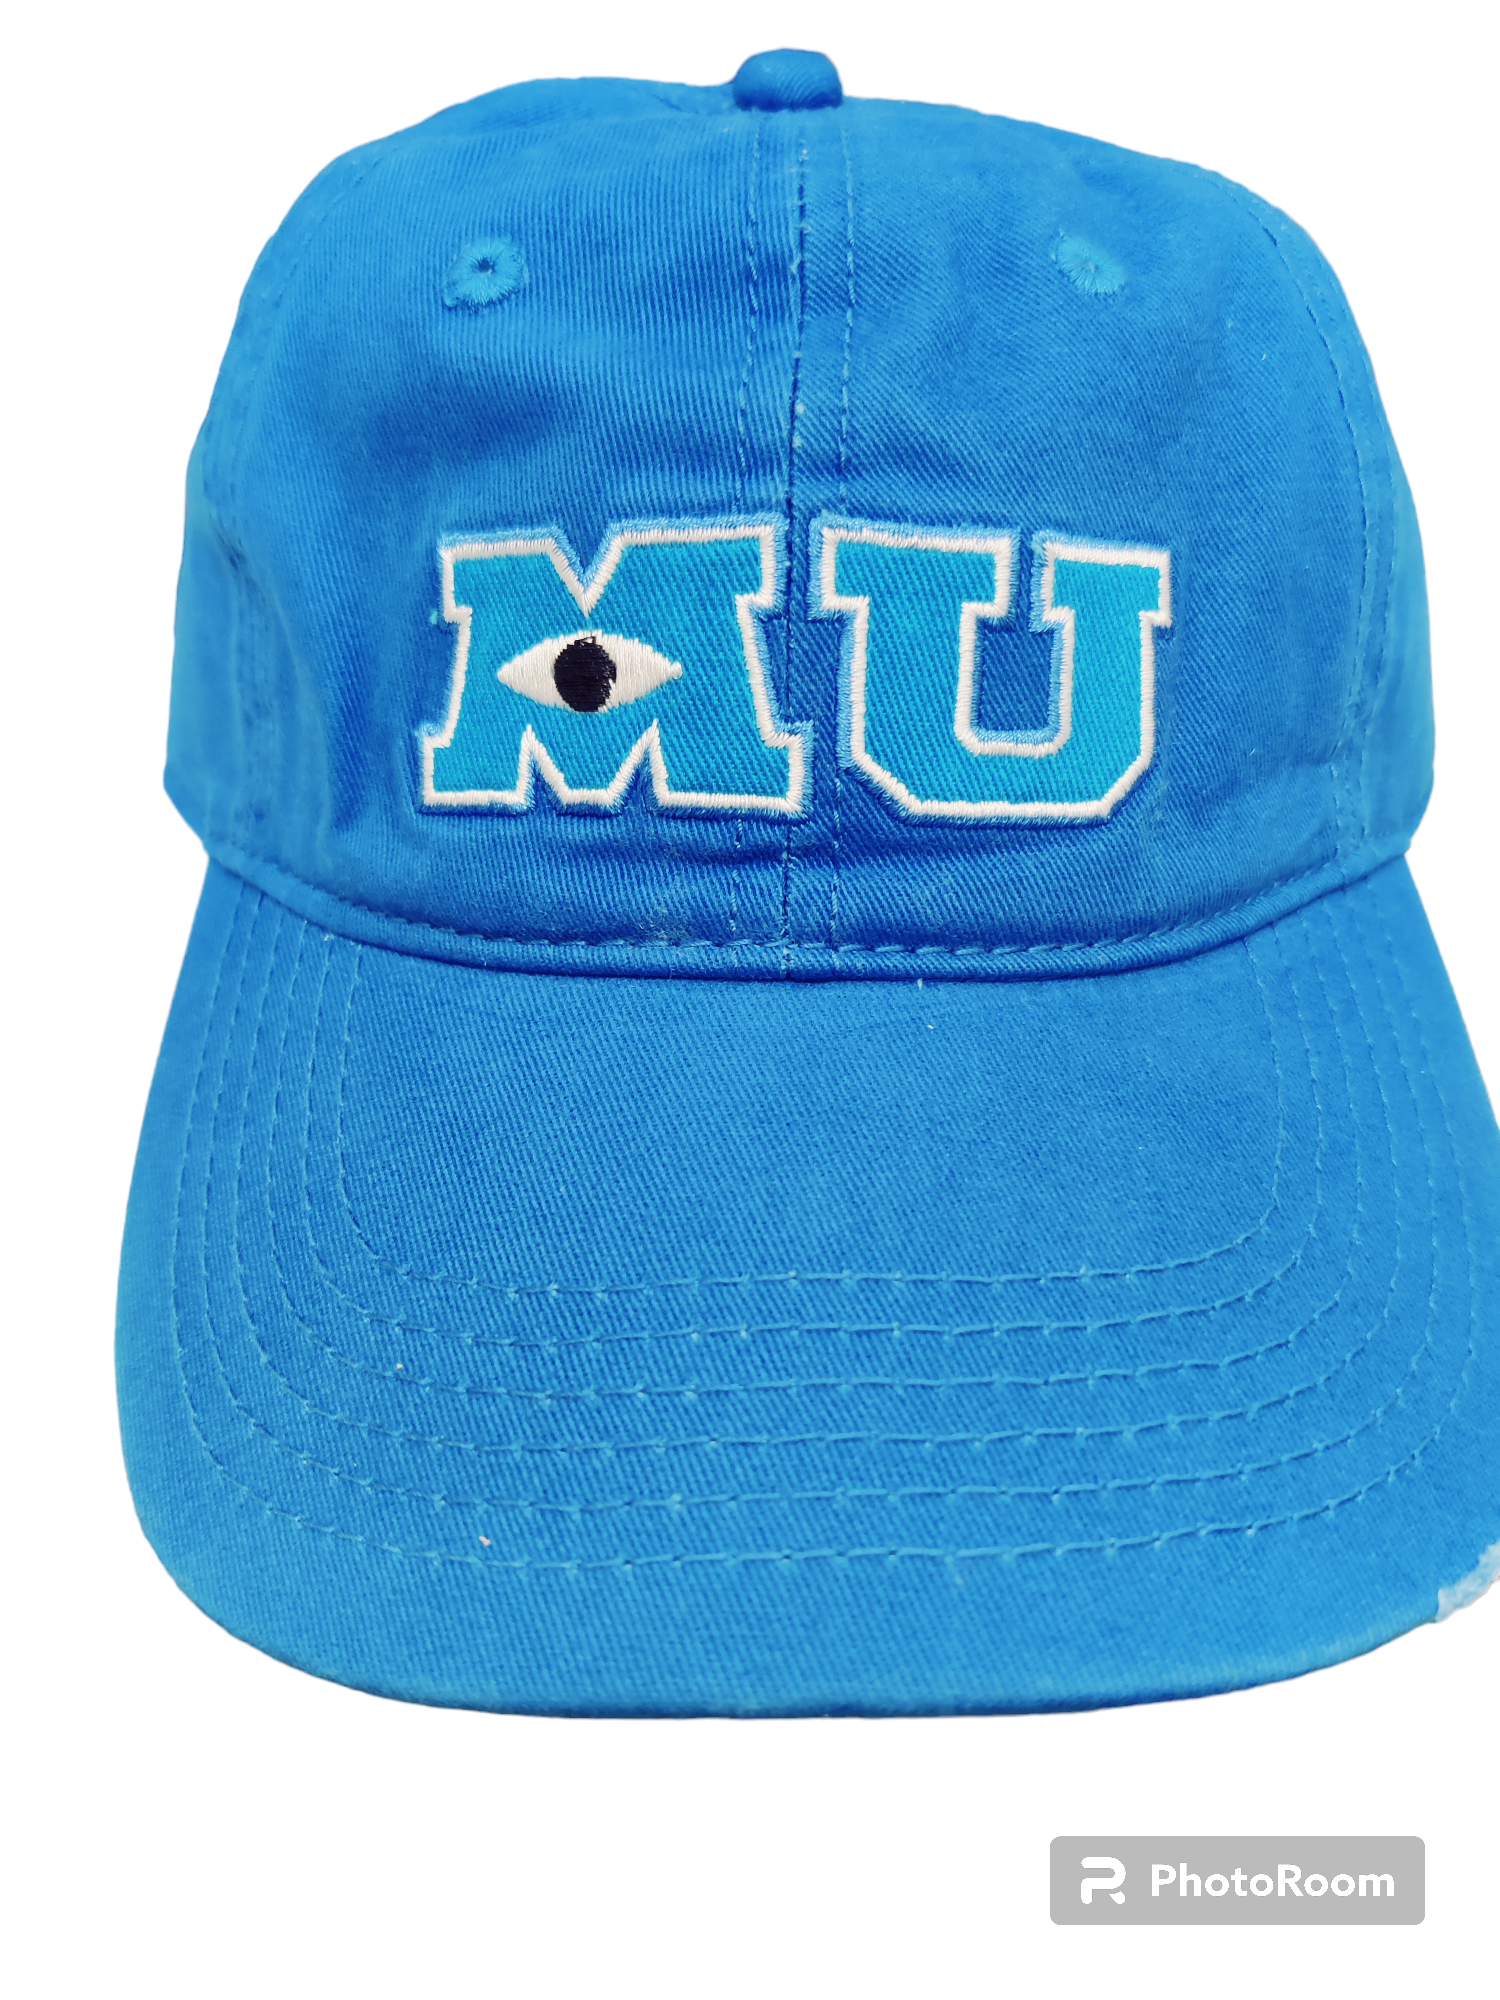 YOUTH Monster University Blue Hat